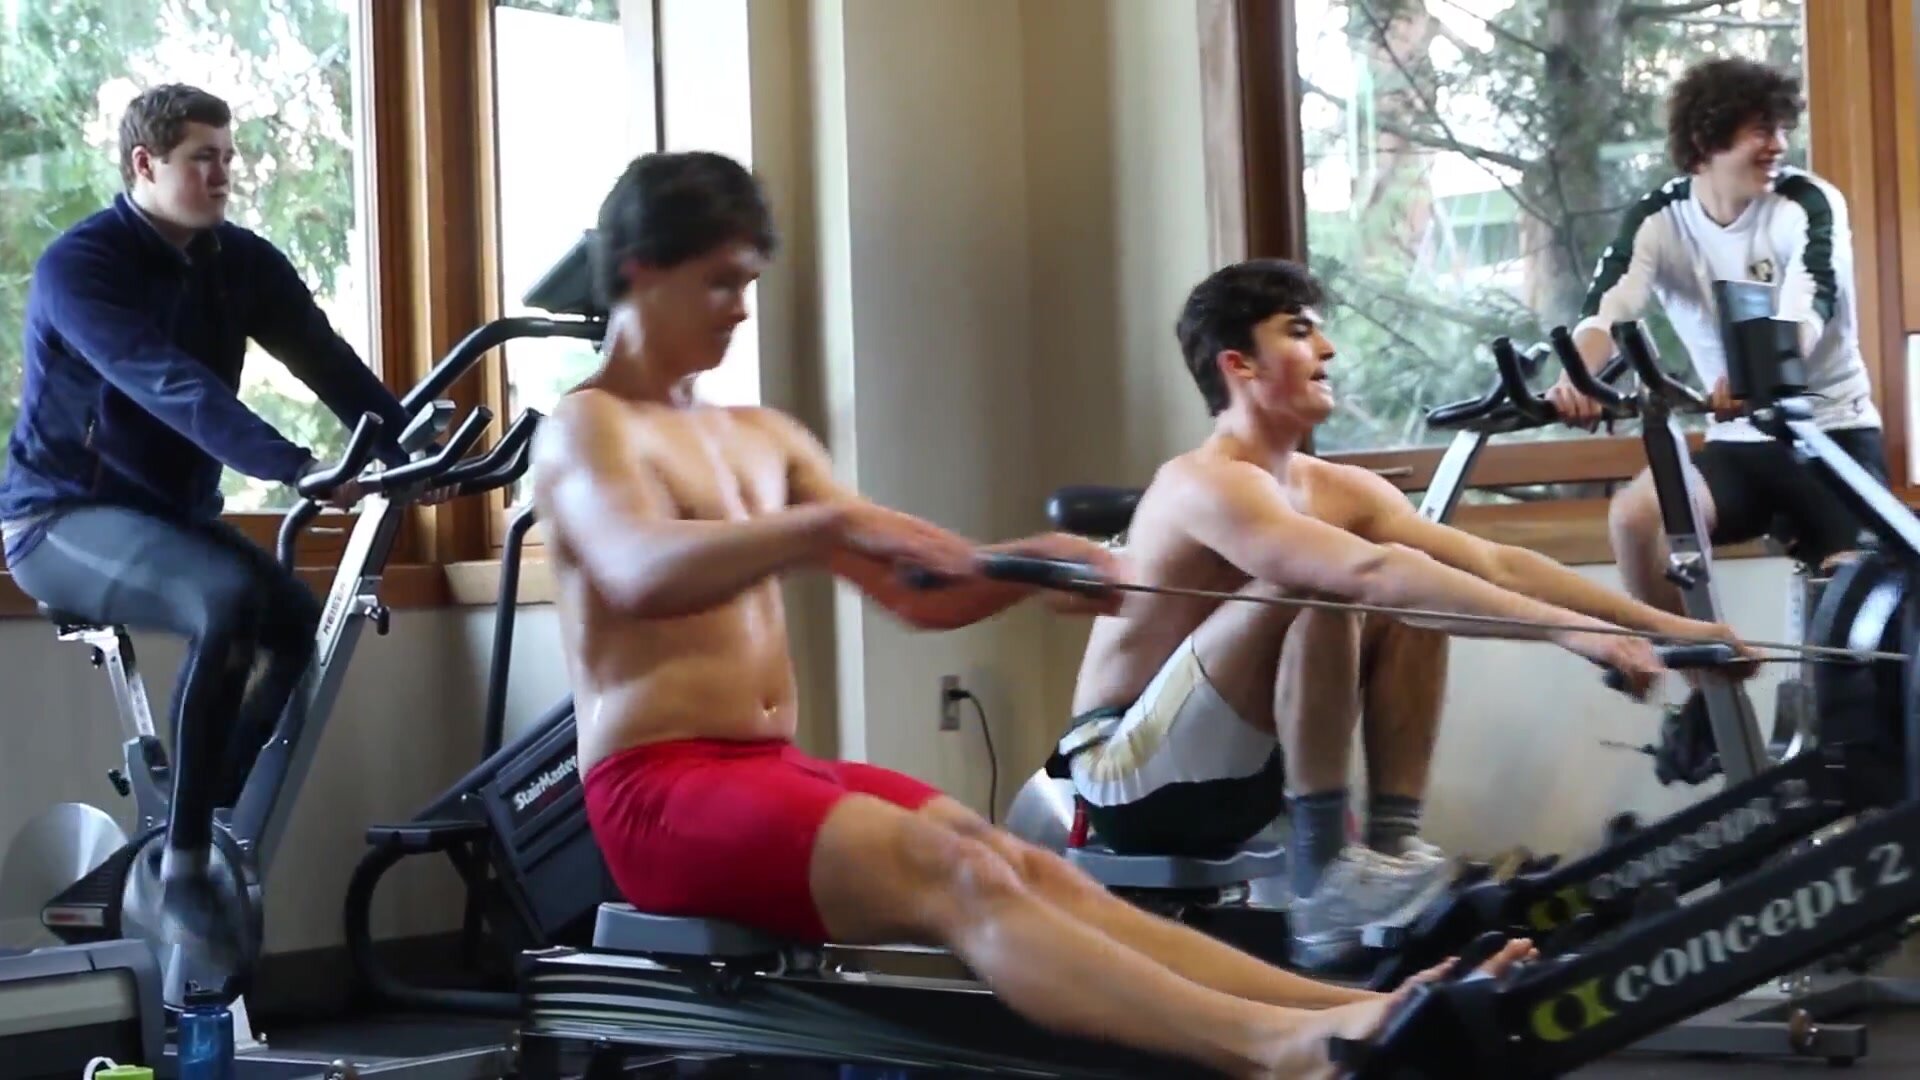 Sexy rowers training indoors